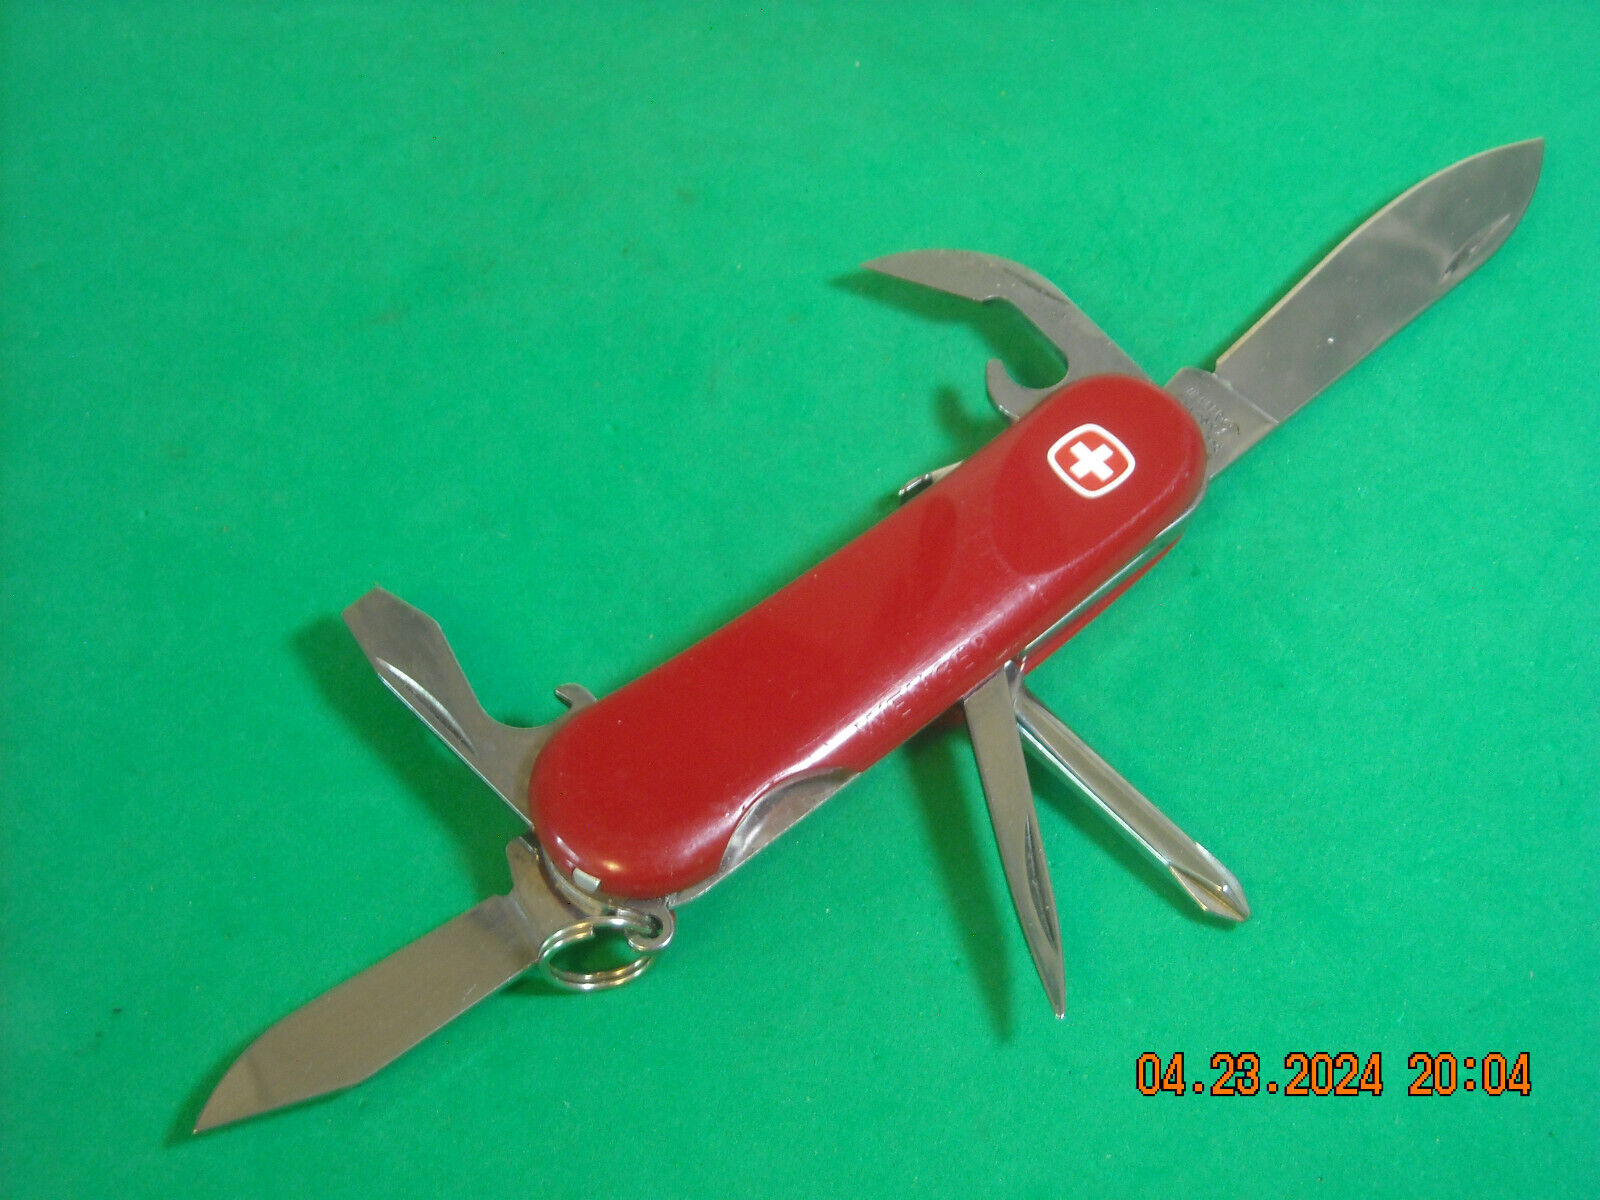 Wenger EVO S111 Swiss Army Knife  locking blade